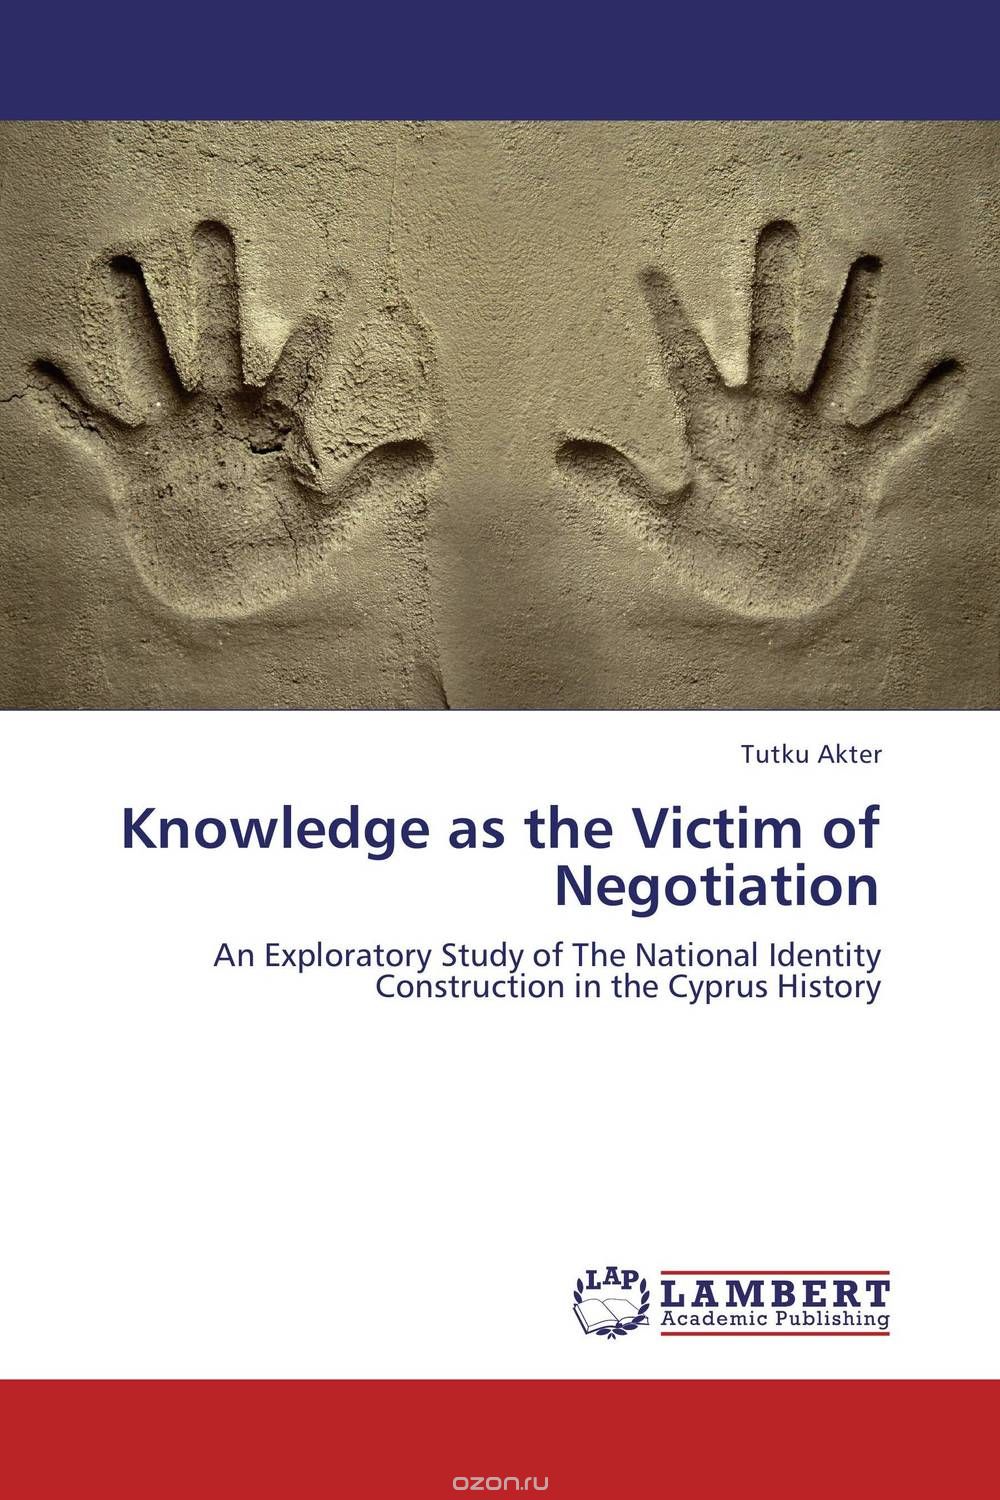 Скачать книгу "Knowledge as the Victim of Negotiation"